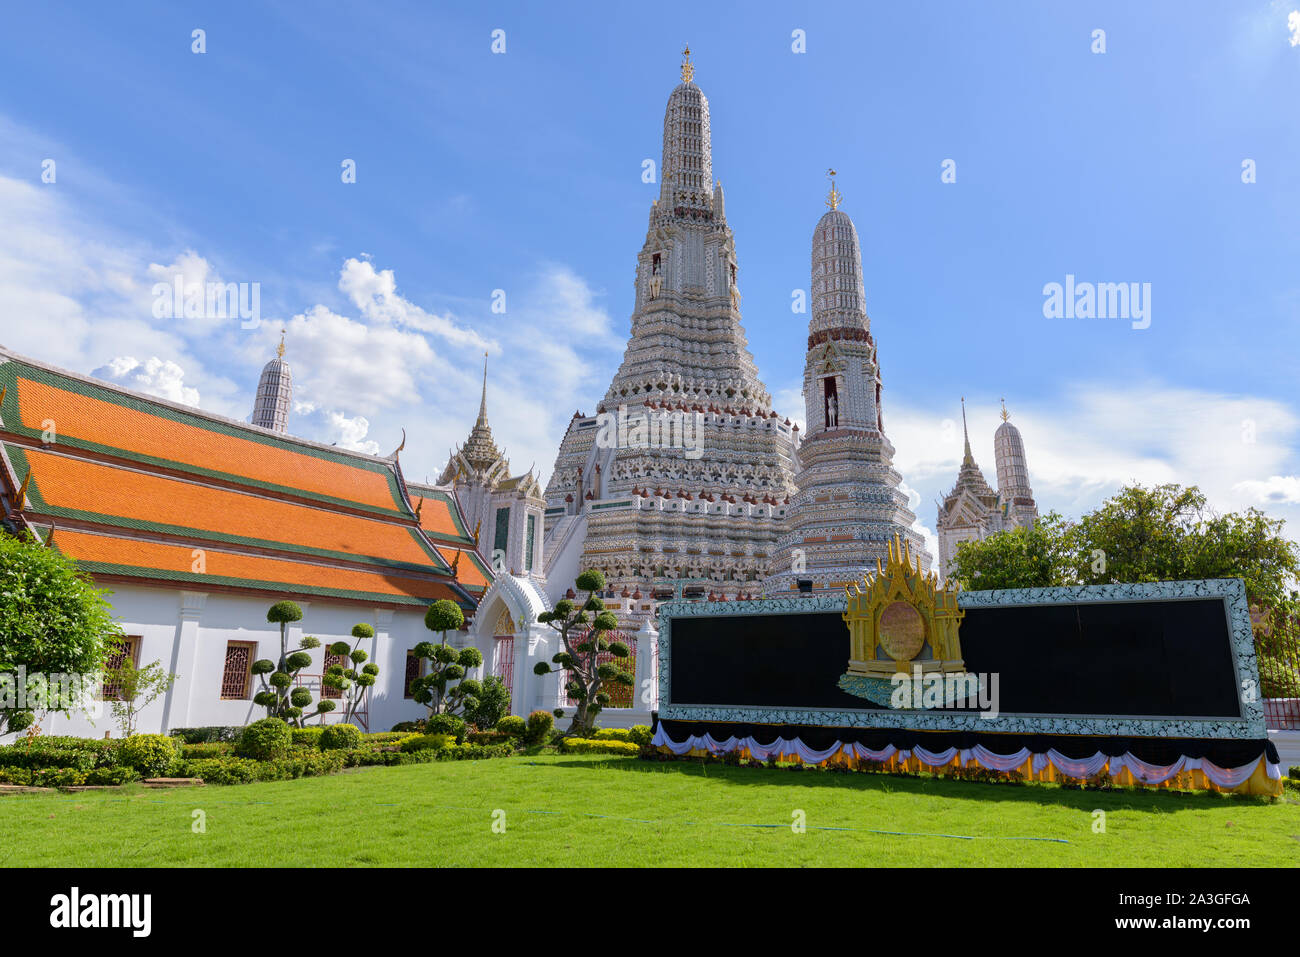 Wat Arun The Buddhist Temple Of Dawn In Bangkok, Thailand Stock Photo